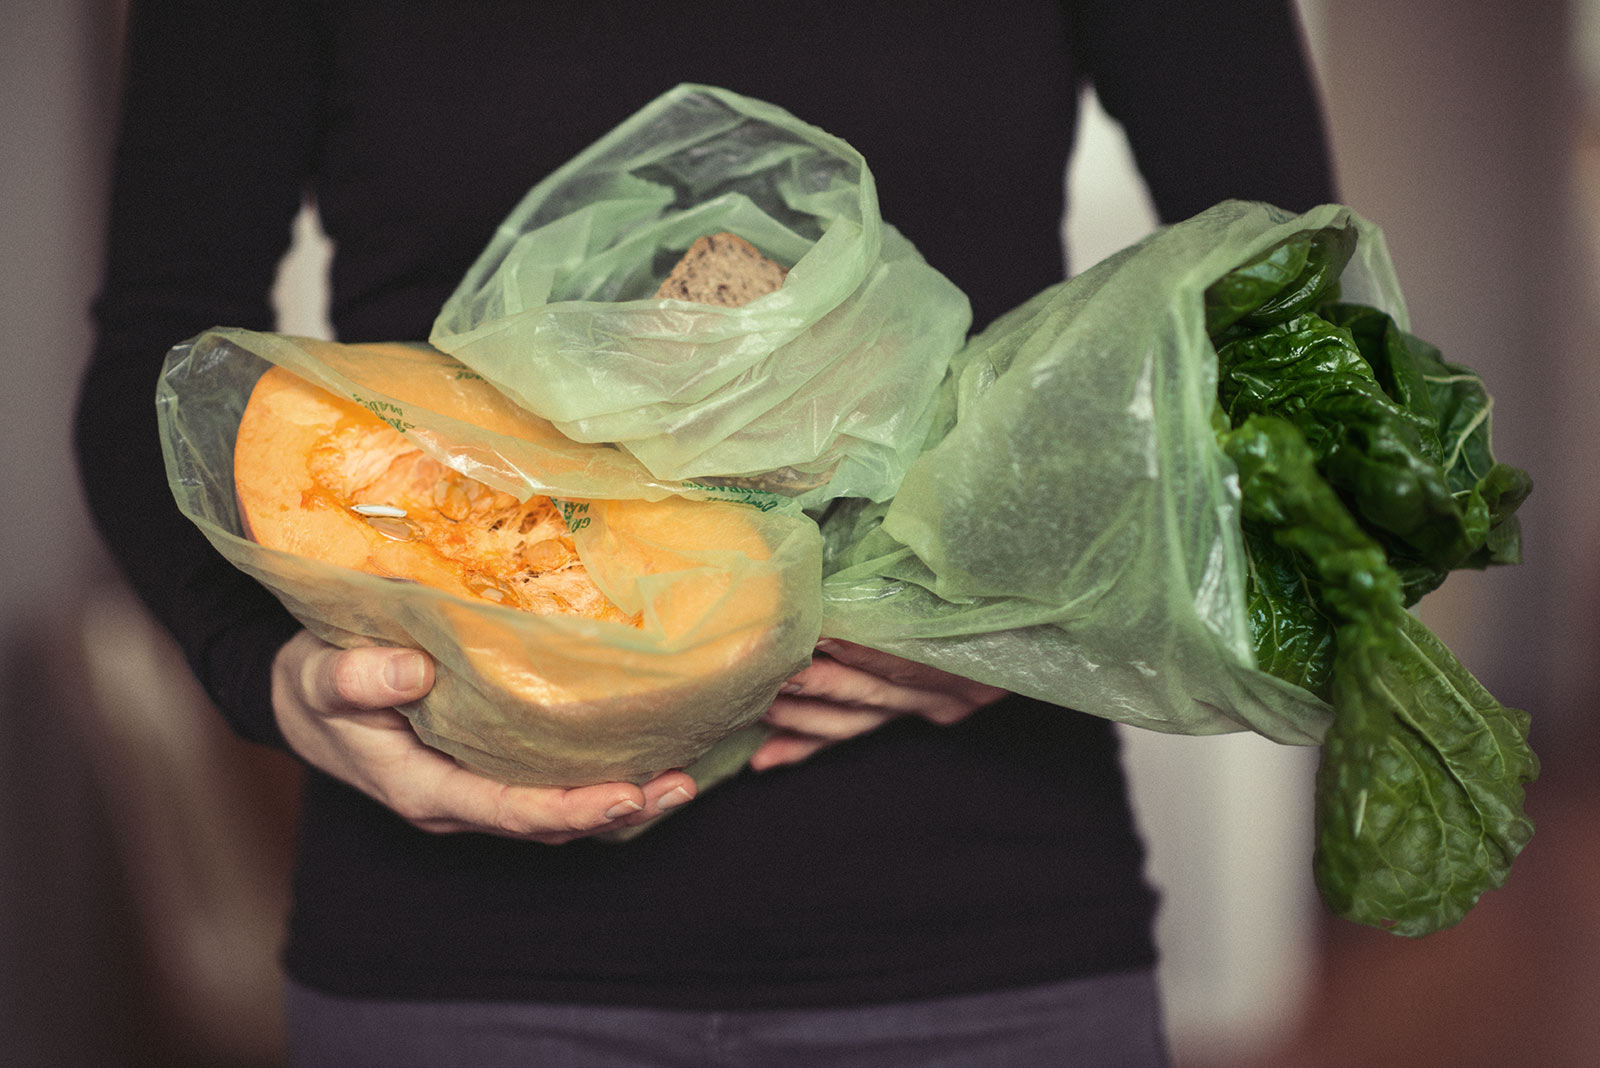 Naturopath Lisa Fitzgibbon demonstrates that Evert-Fresh Green Bags help keep organic produce fresh